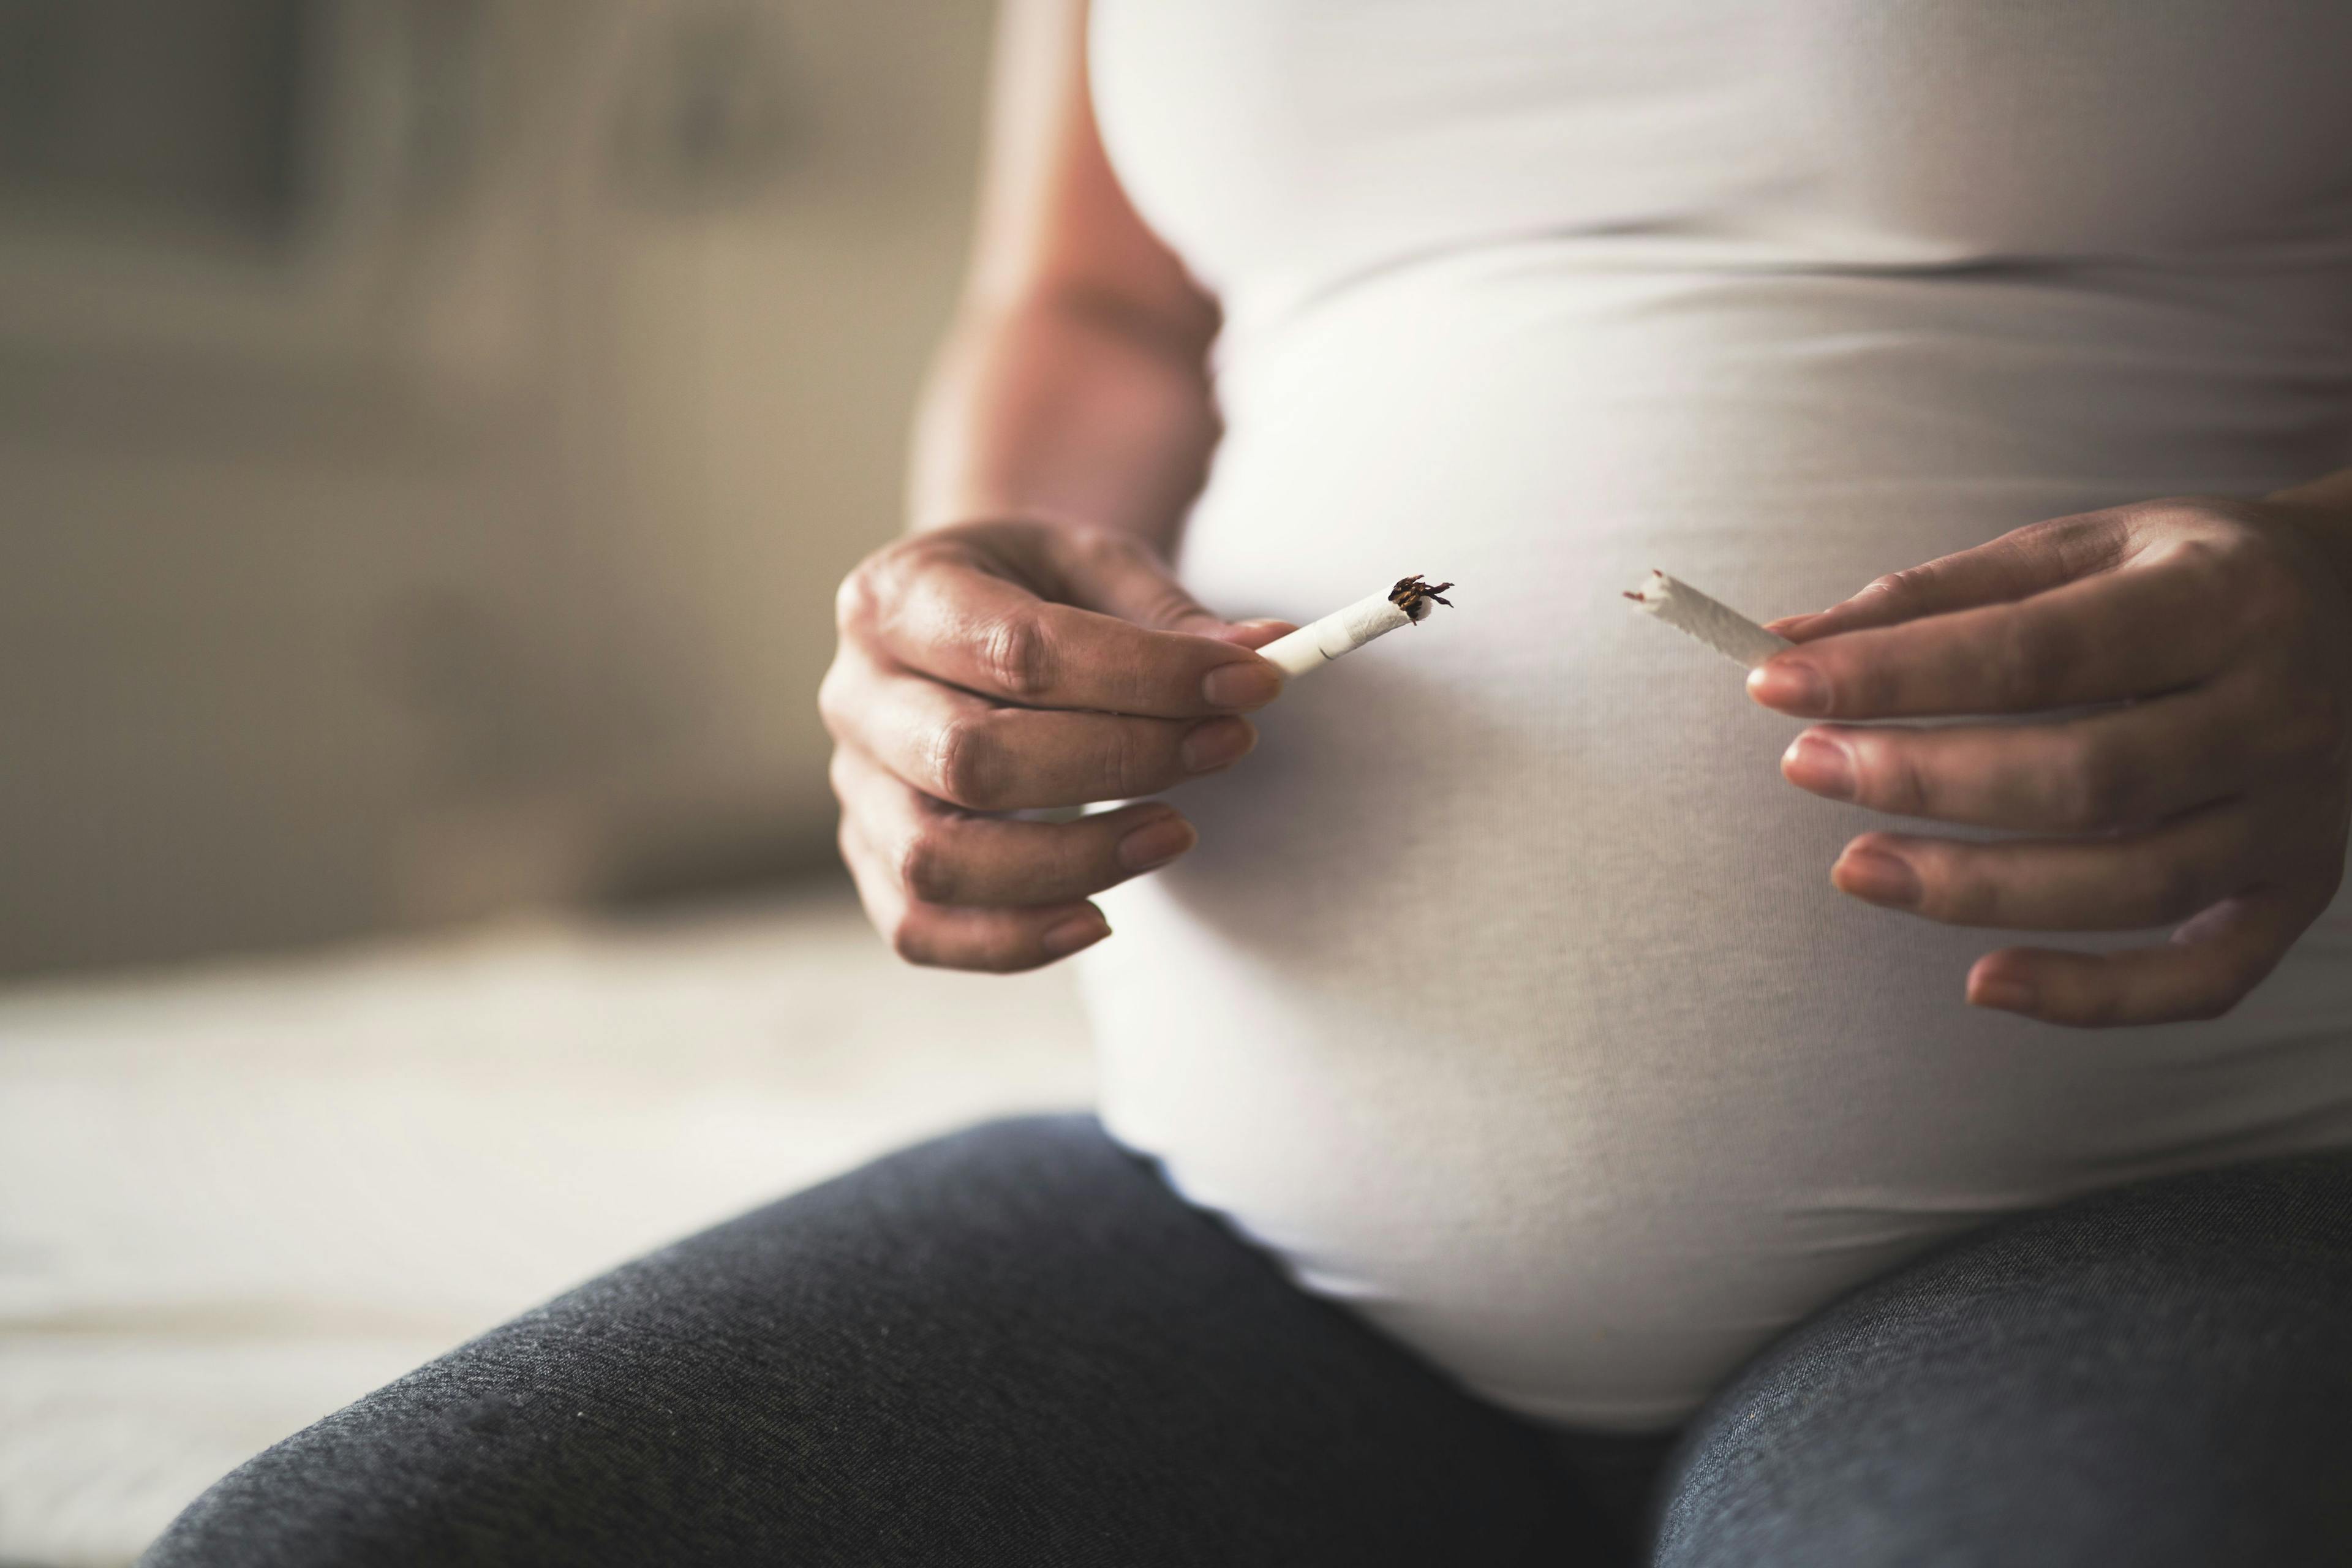 Pregnant Woman Breaking Cigarette | image credit: NDABCREATIVITY - stock.adobe.com